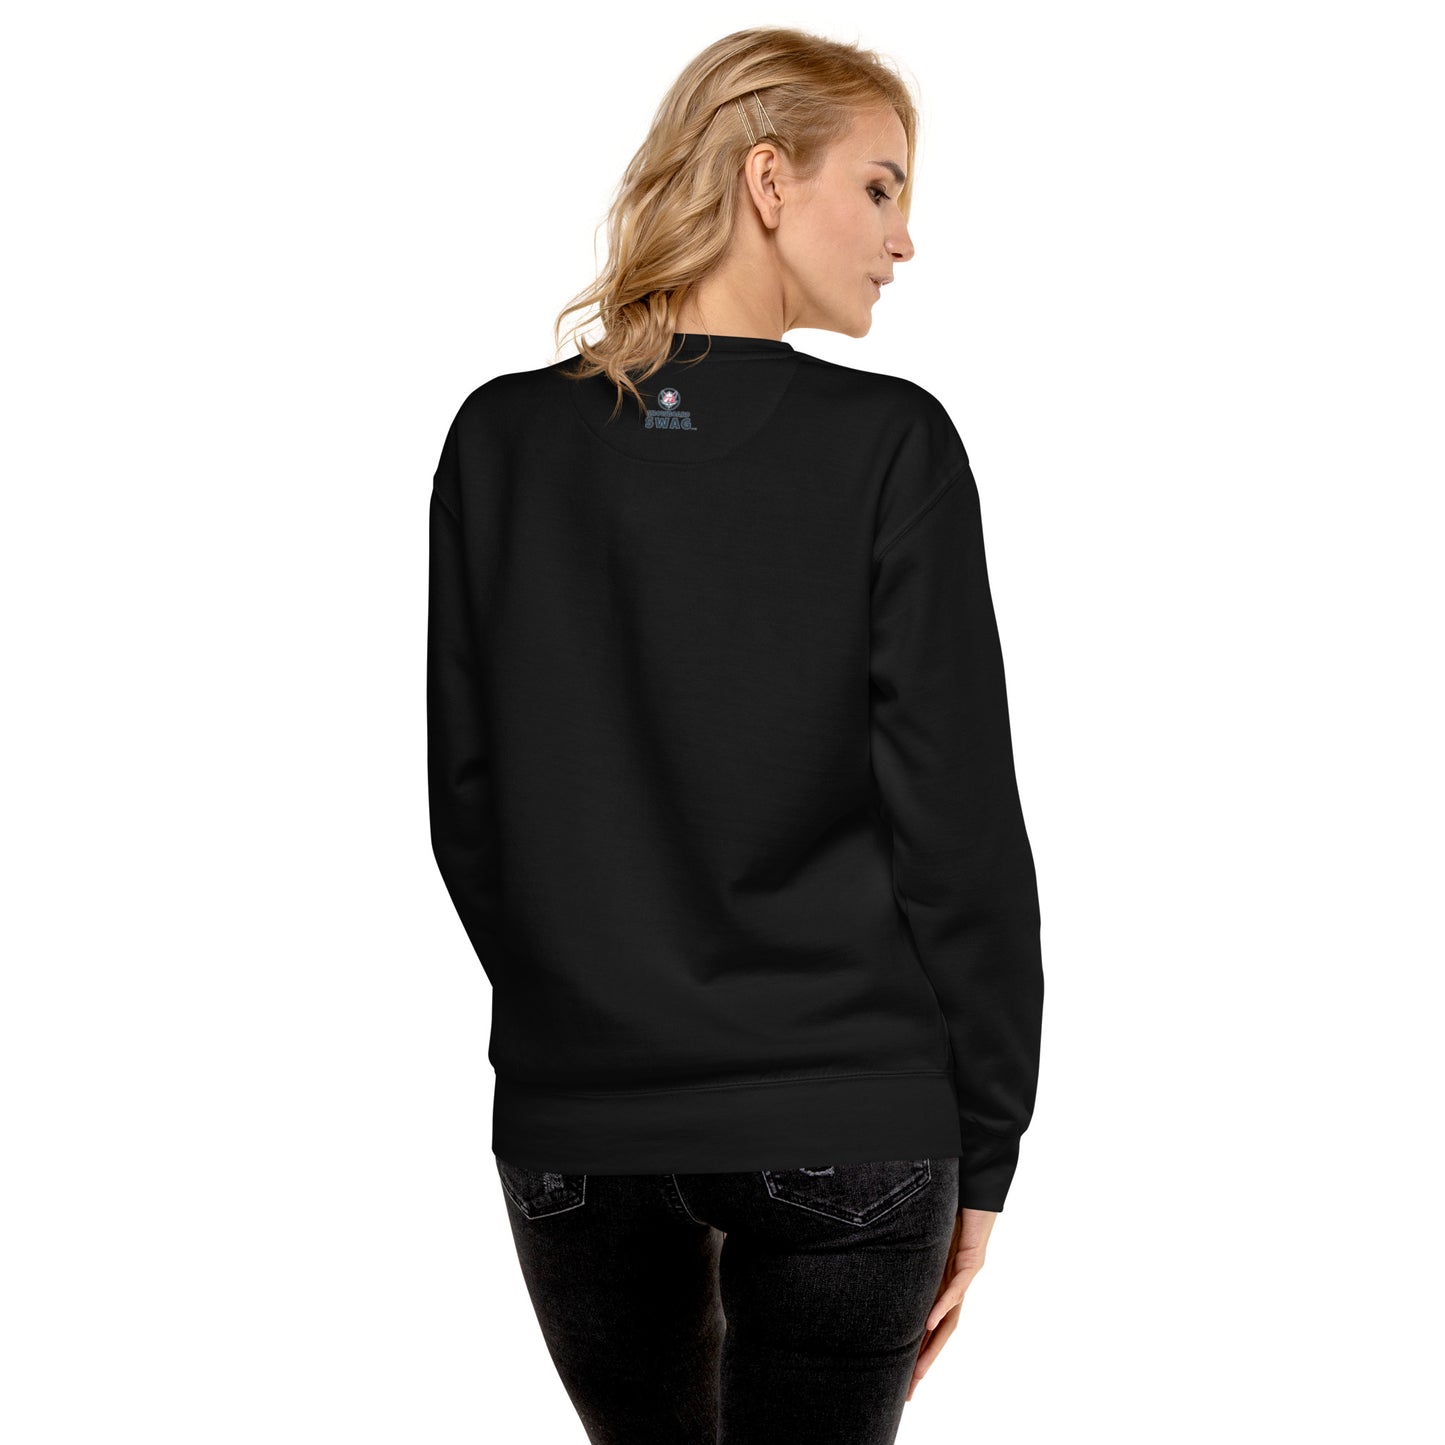 Snowboard Mom Sweatshirt - Stylish & Comfy for Winter